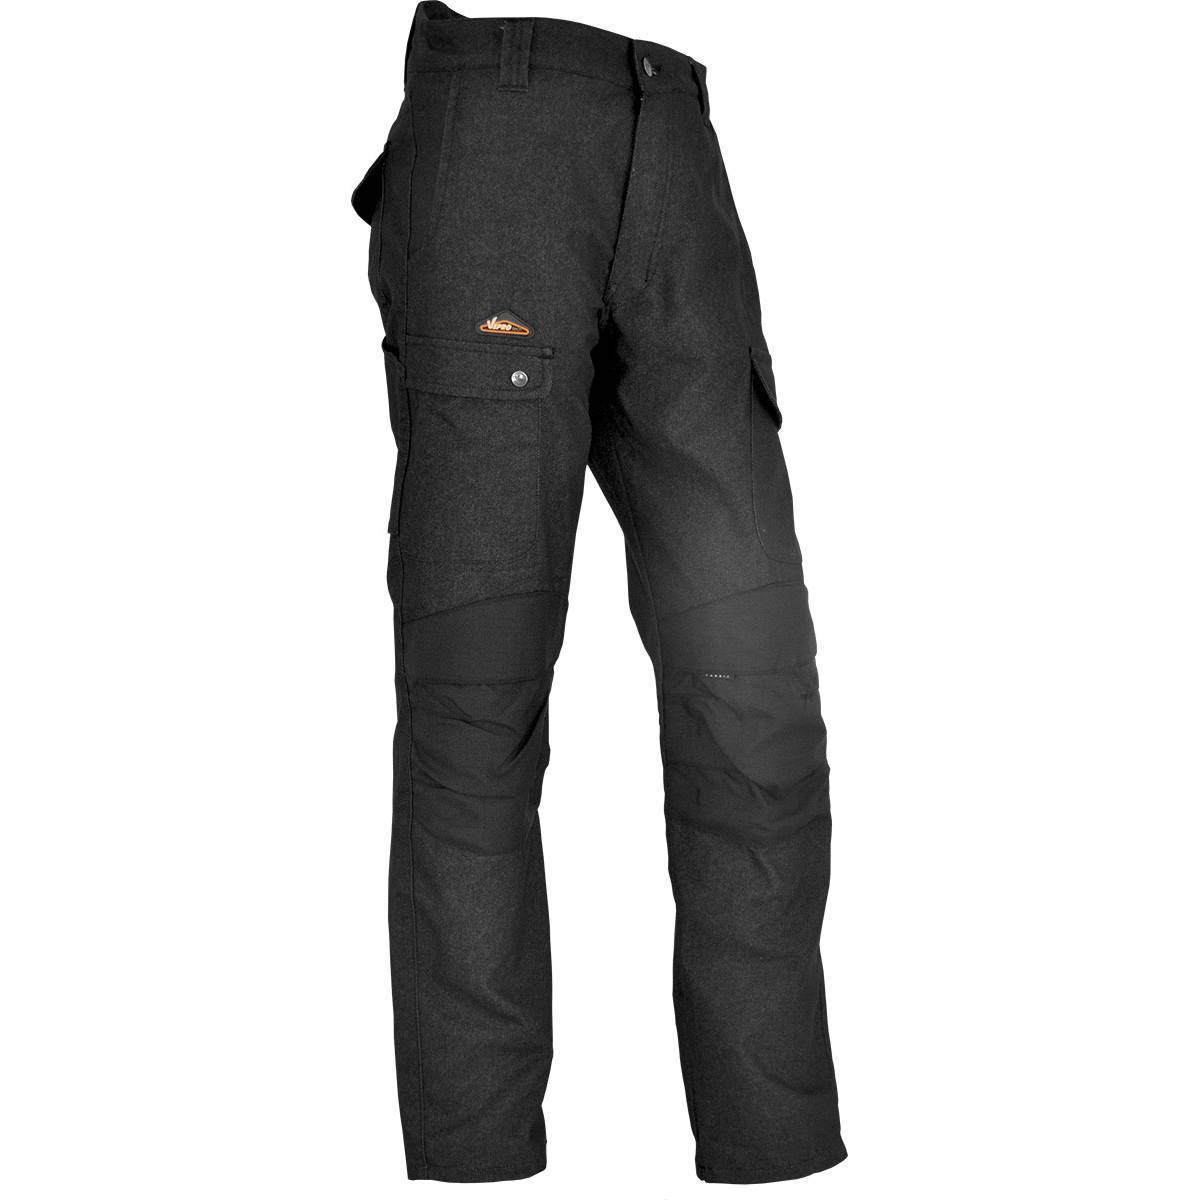 Pantalones de trabajo ENDU talla 40, negro